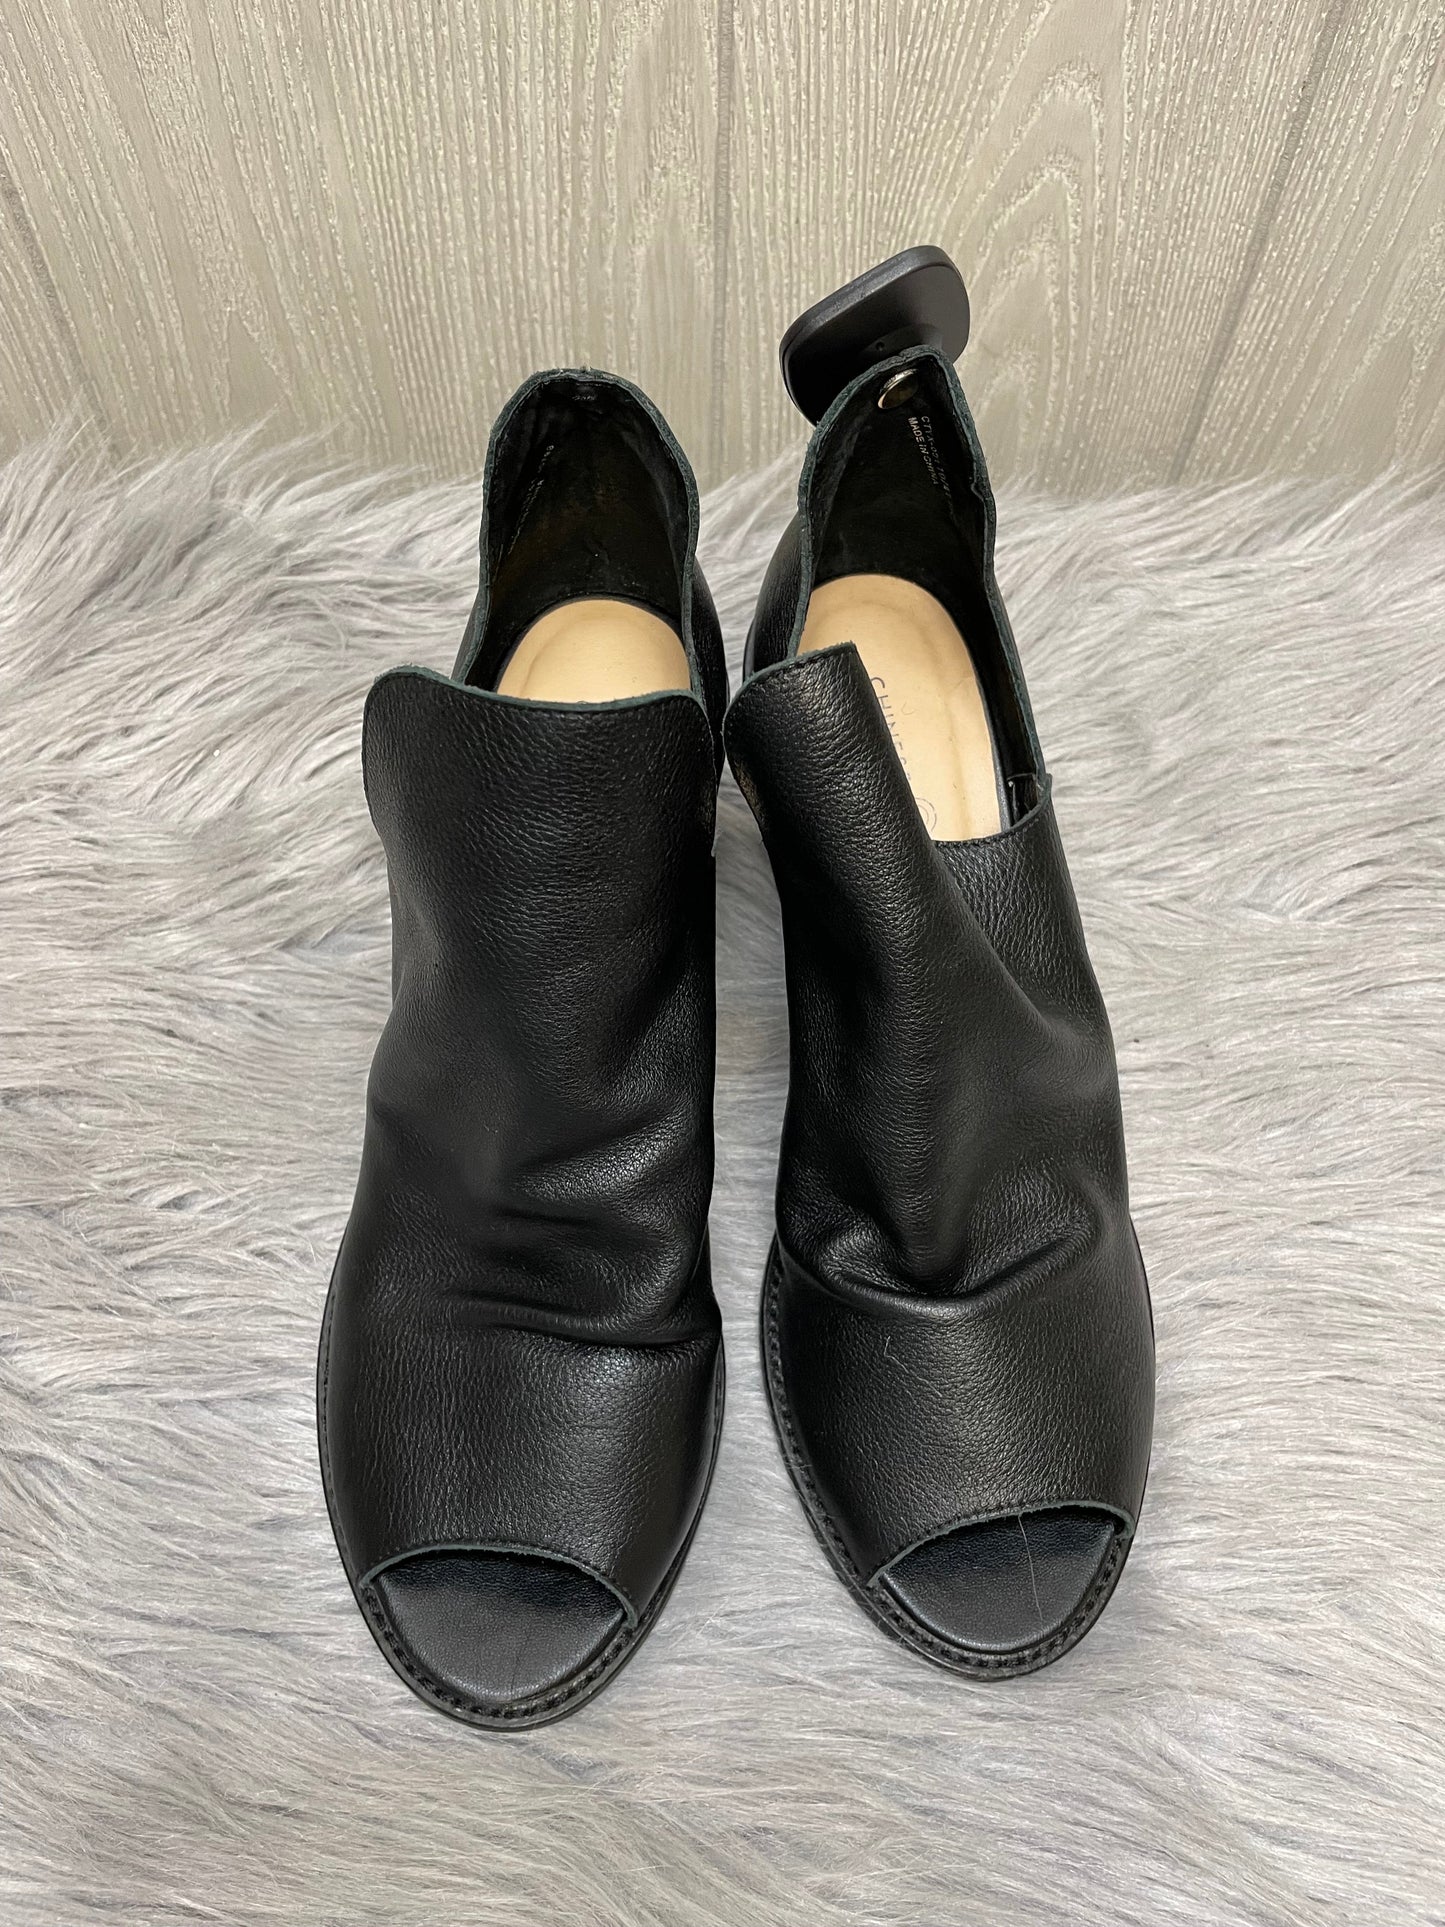 Black Shoes Heels Block Chinese Laundry, Size 10